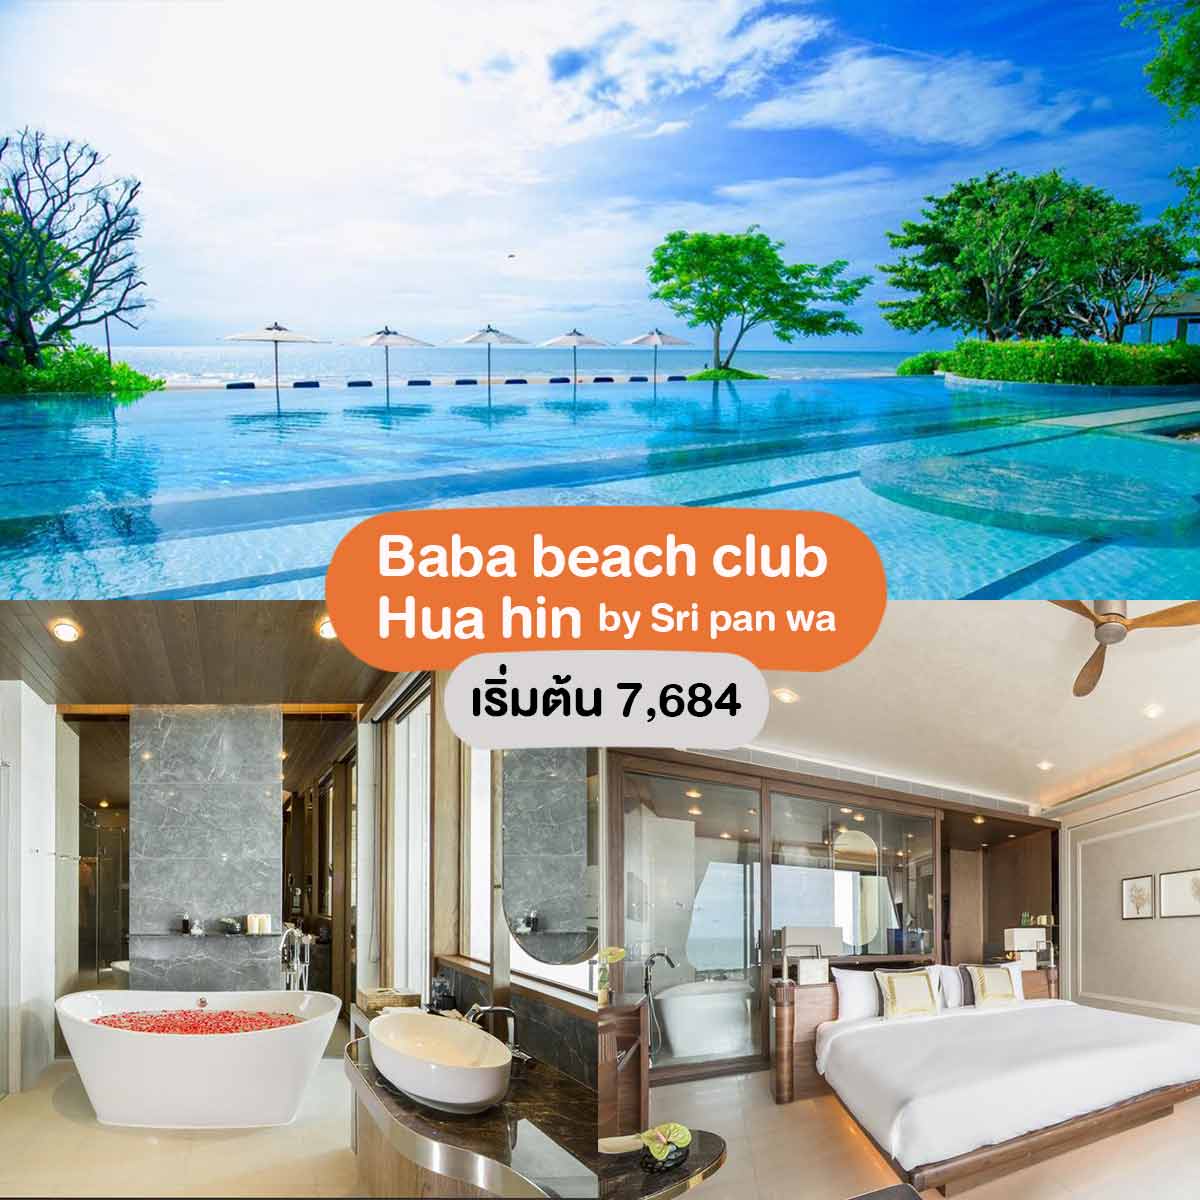 Baba beach club Hua hin by Sri pan wa - ประจวบคีรีขันธ์